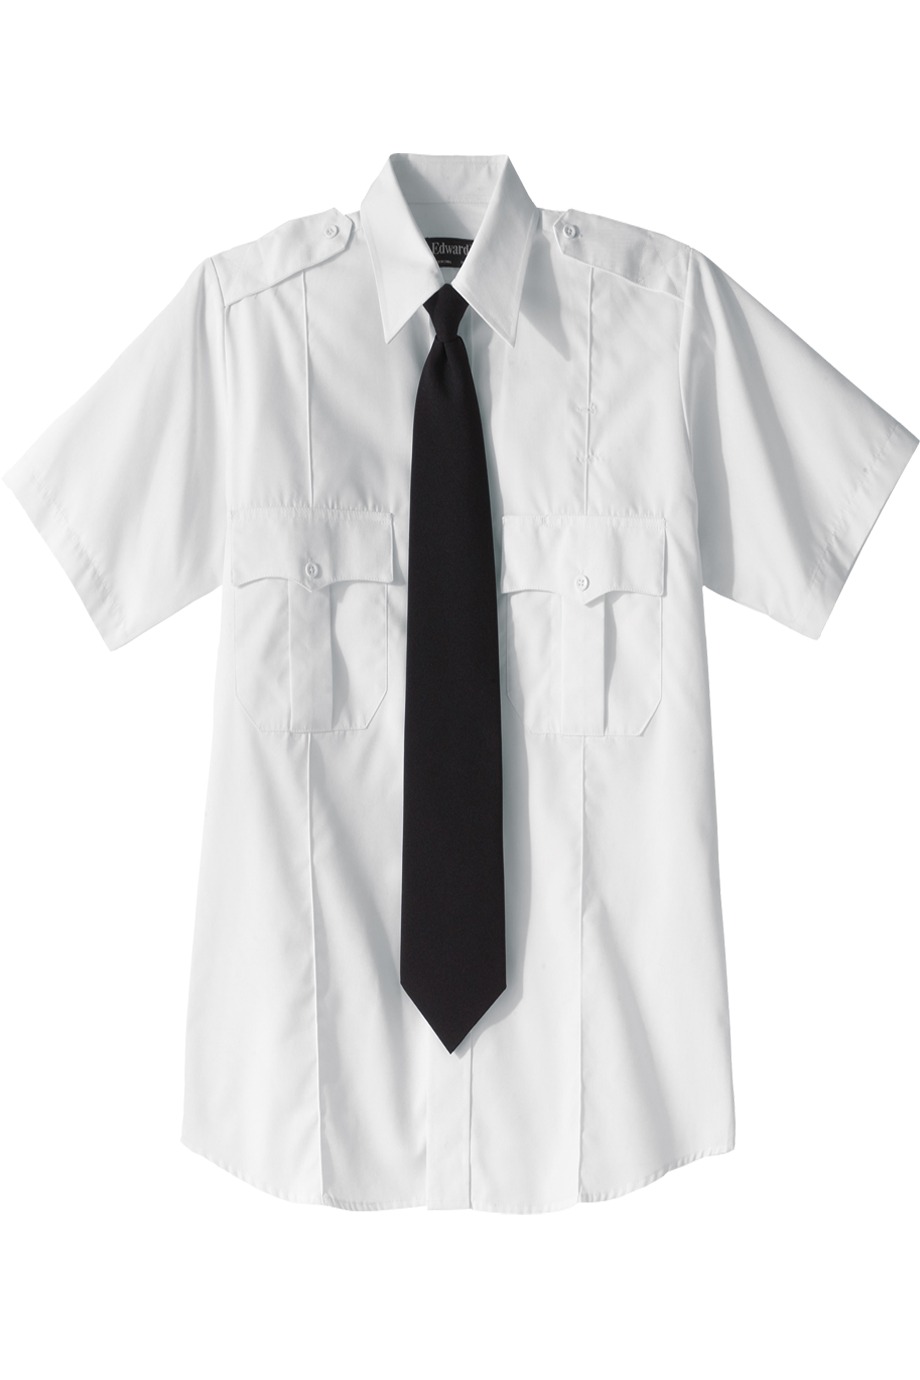 Edwards Garment 1226 - Security Short Sleeve Shirt Polyester/Cotton Blend